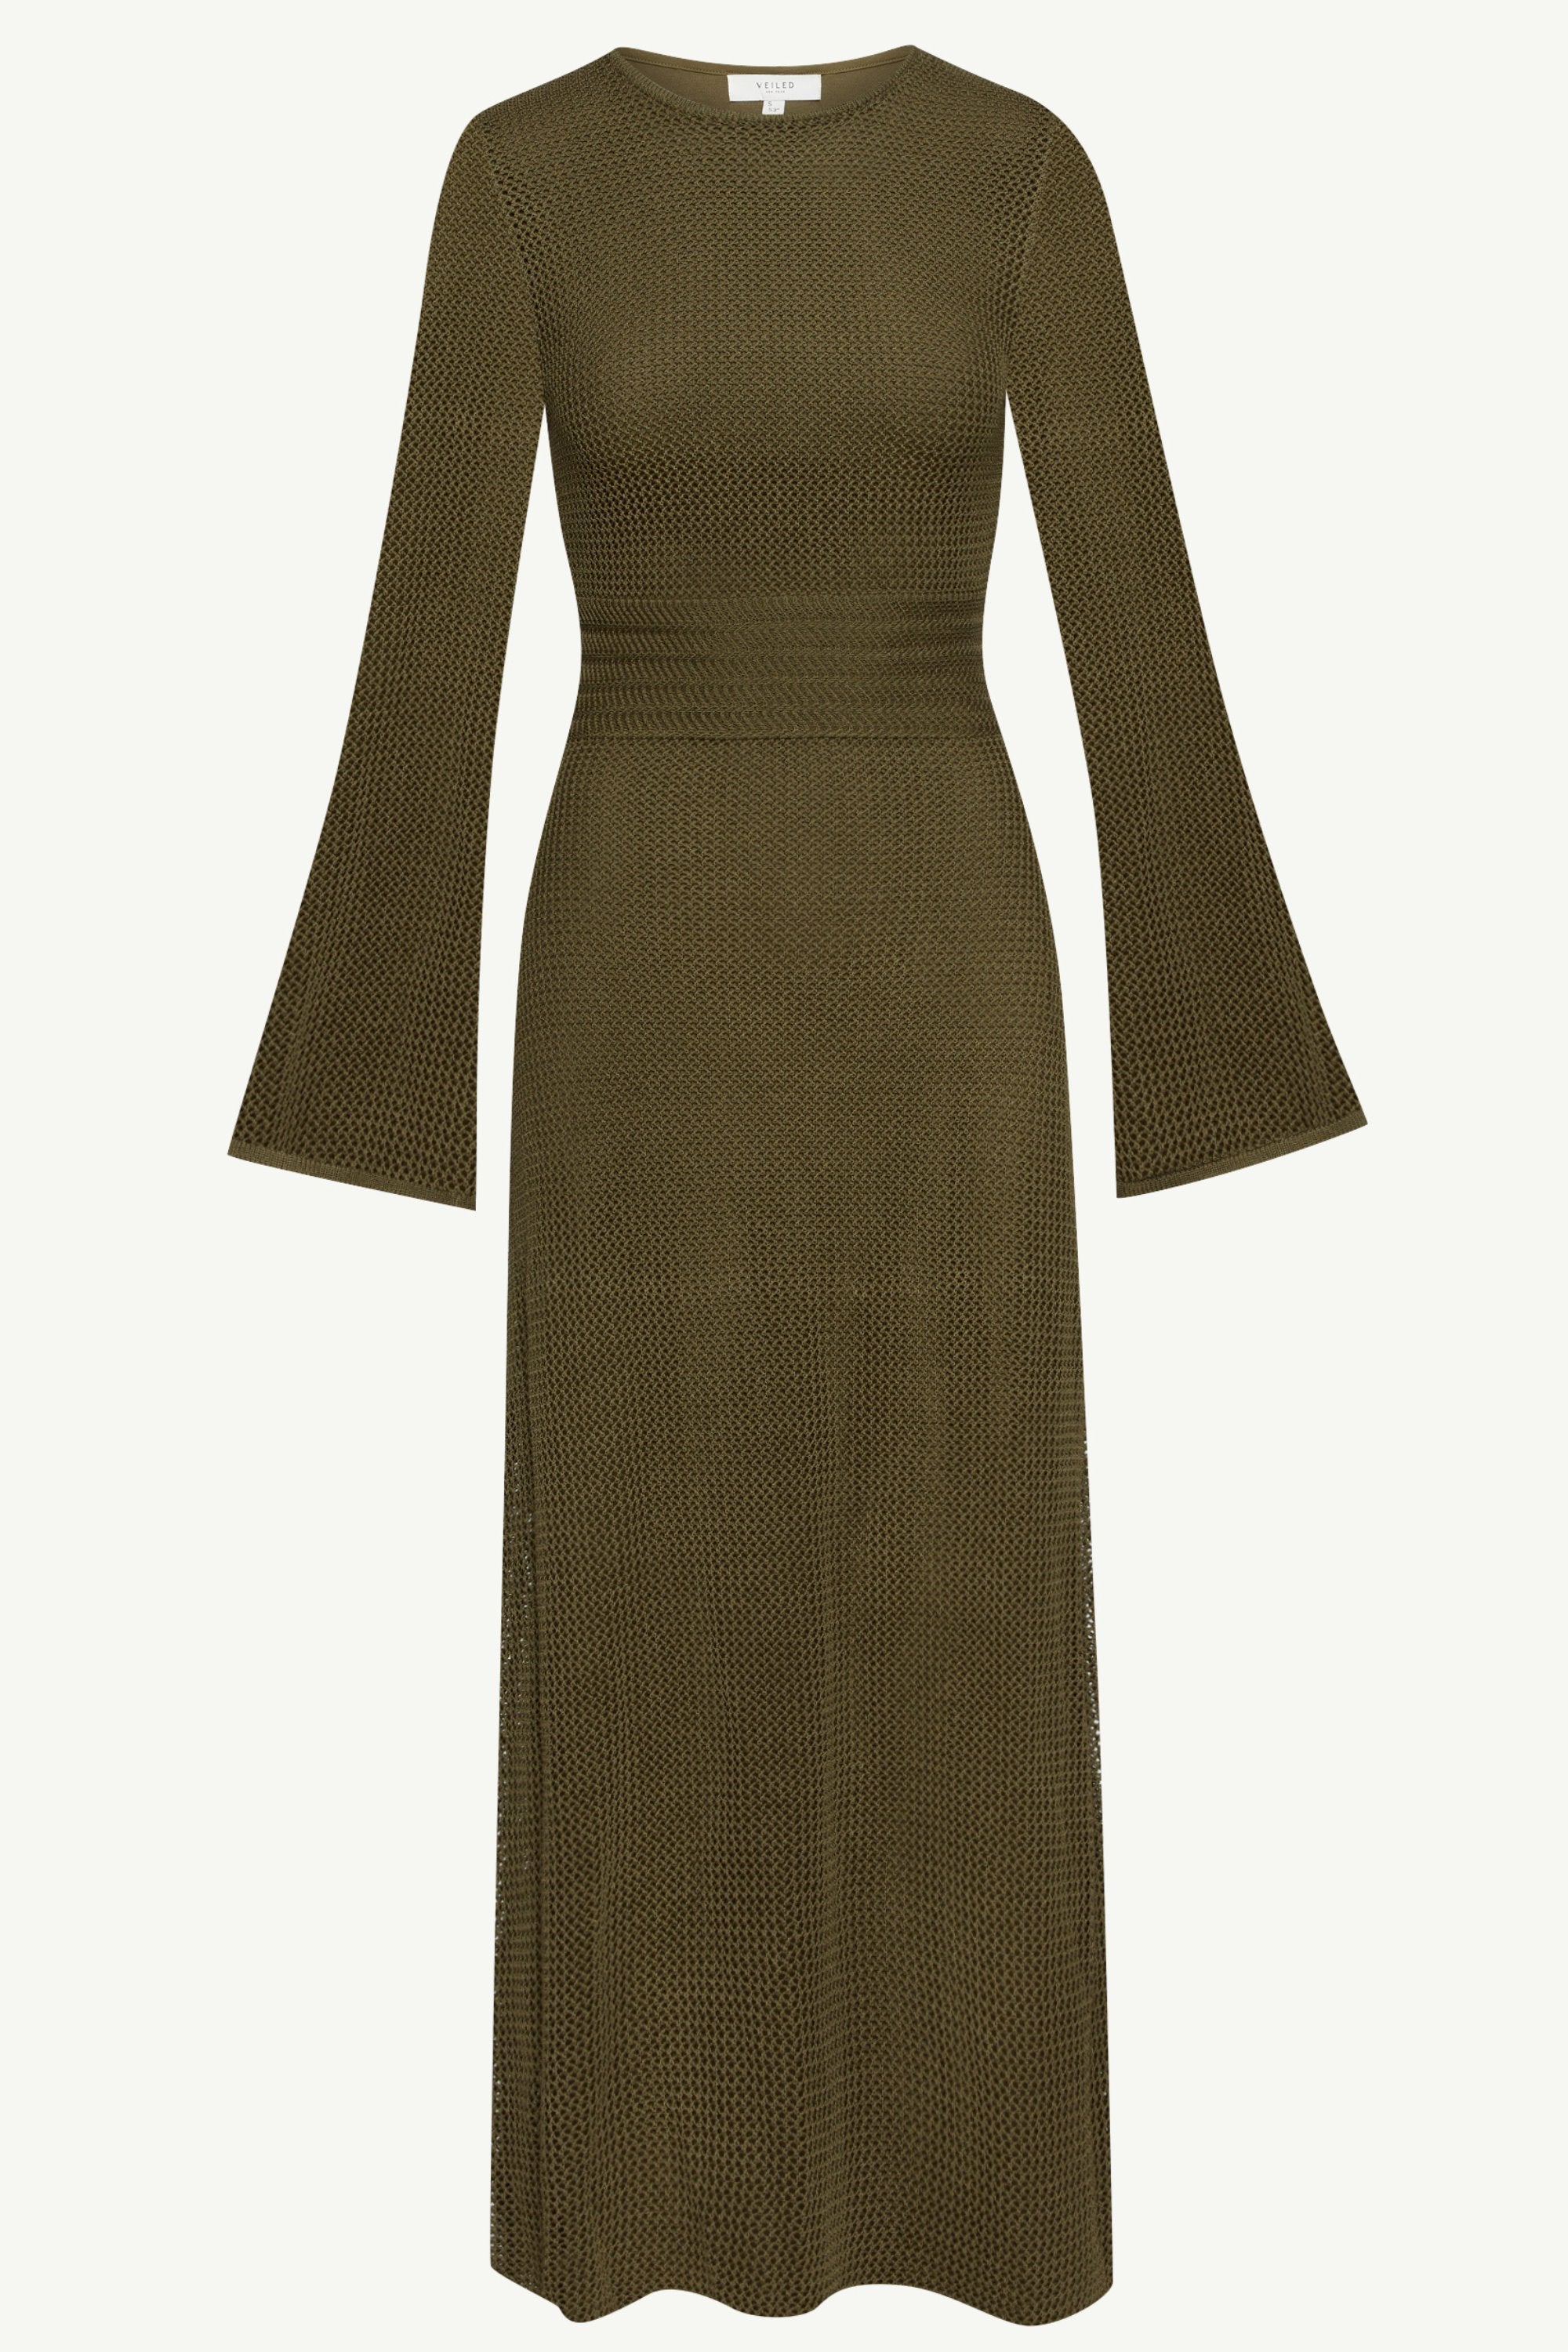 Rachel Crochet Maxi Dress - Dark Olive Clothing epschoolboard 